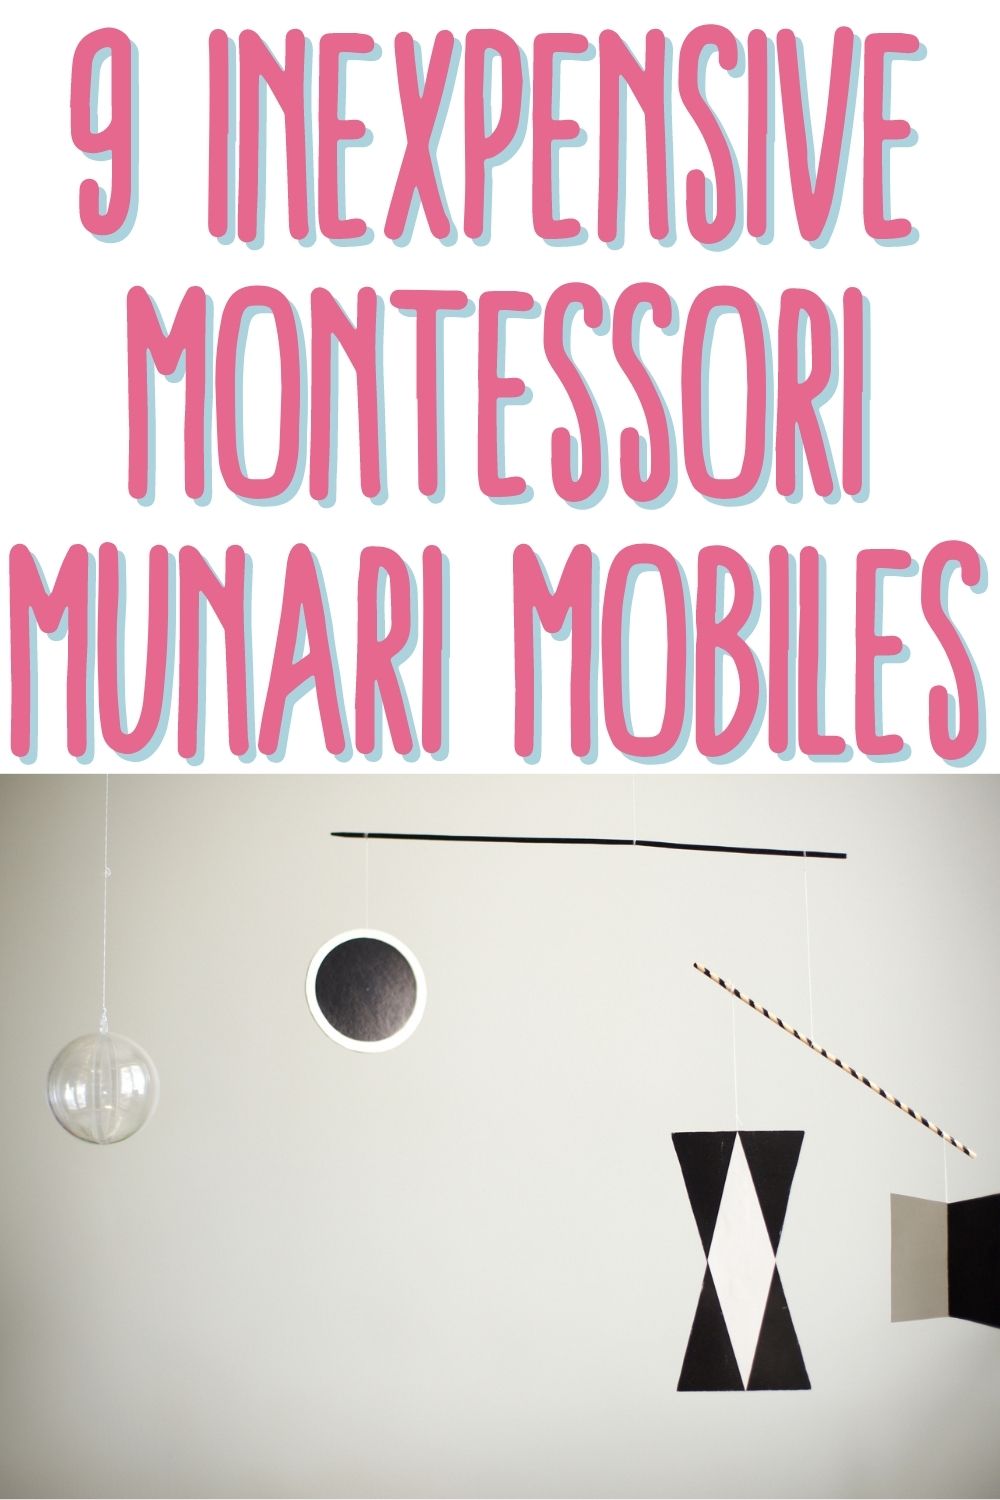 montessori mobiles for babies